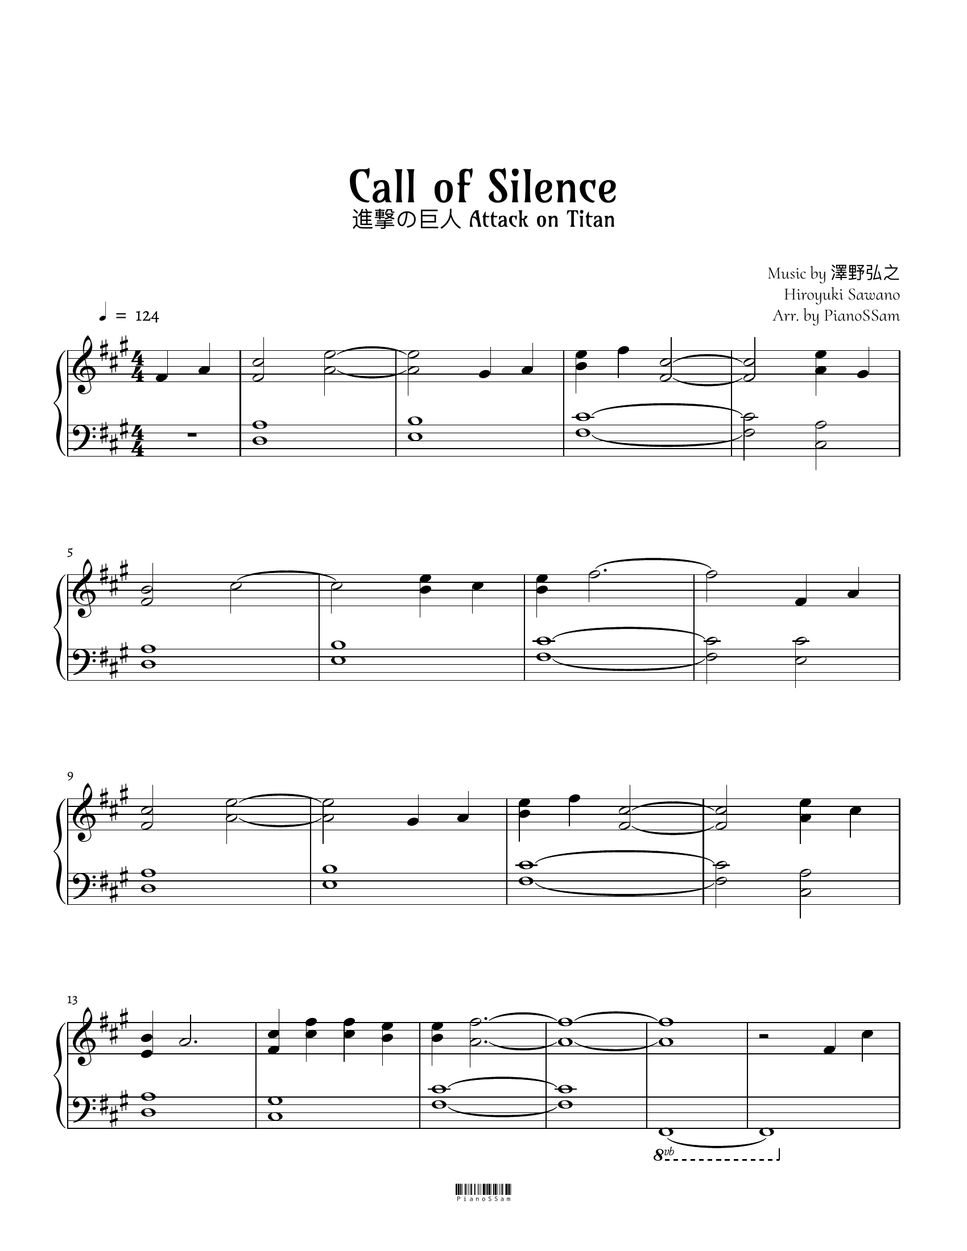 Hiroyuki Sawano - Call of Silence (Attack on Titan) by PianoSSam